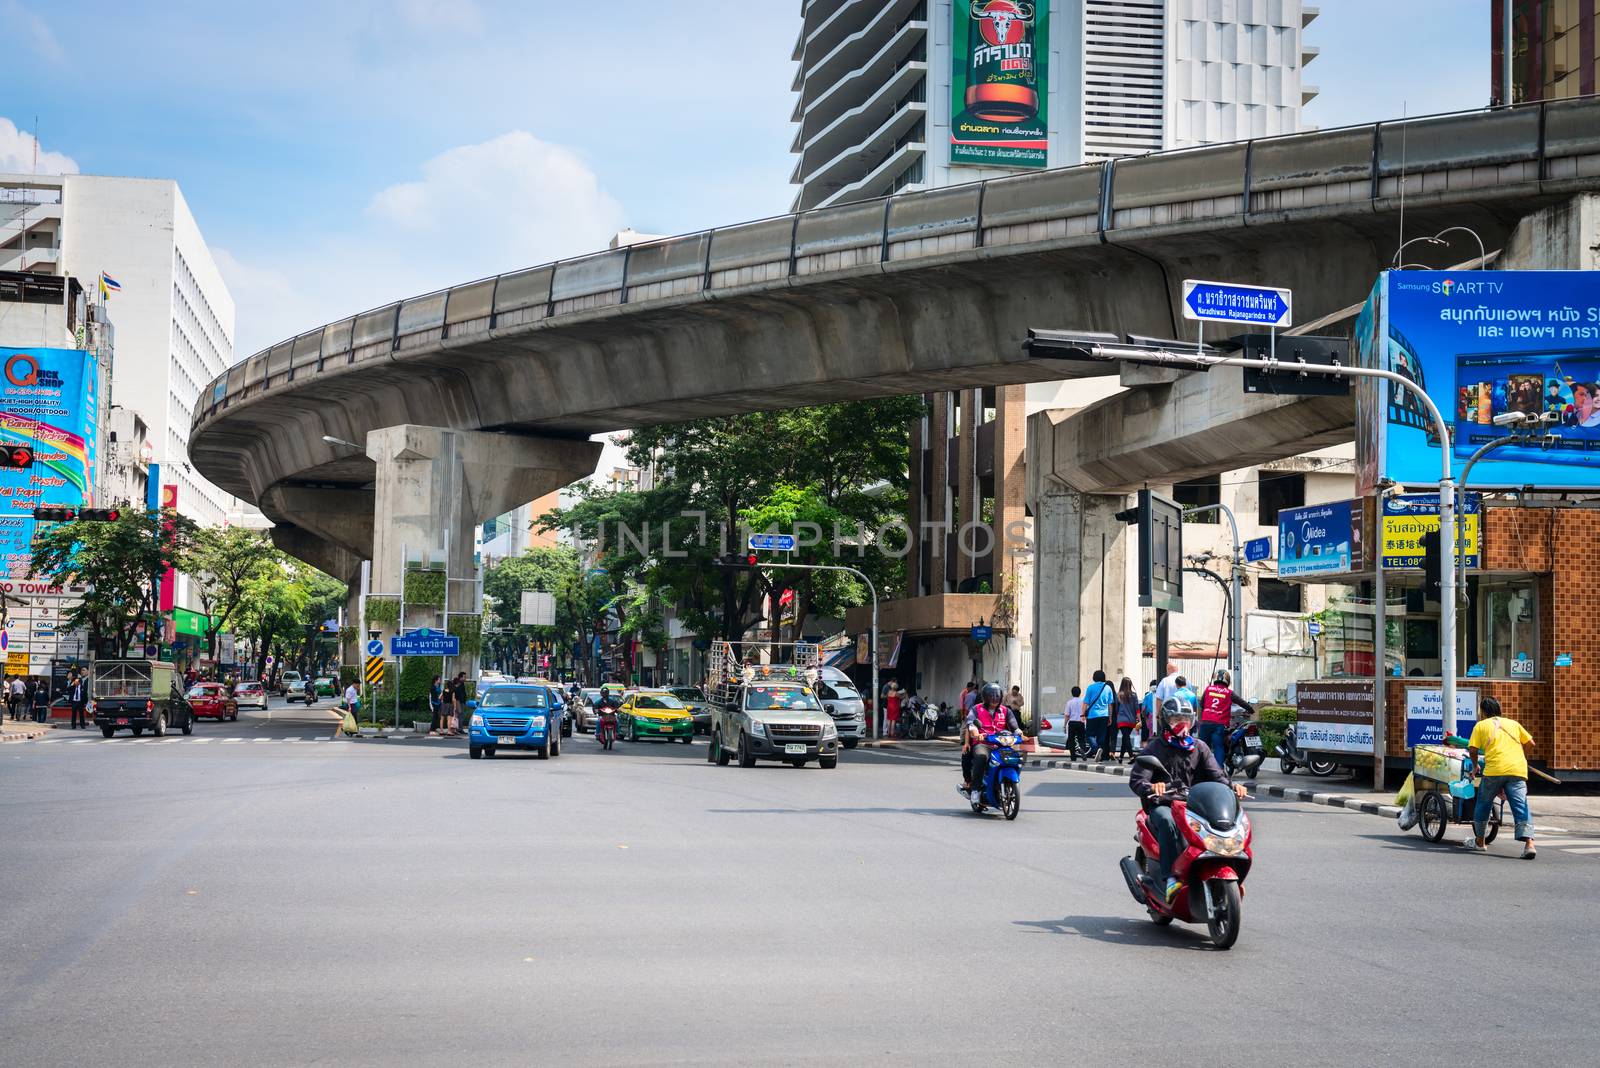 Motorbikes and cars on Bangkok street by iryna_rasko